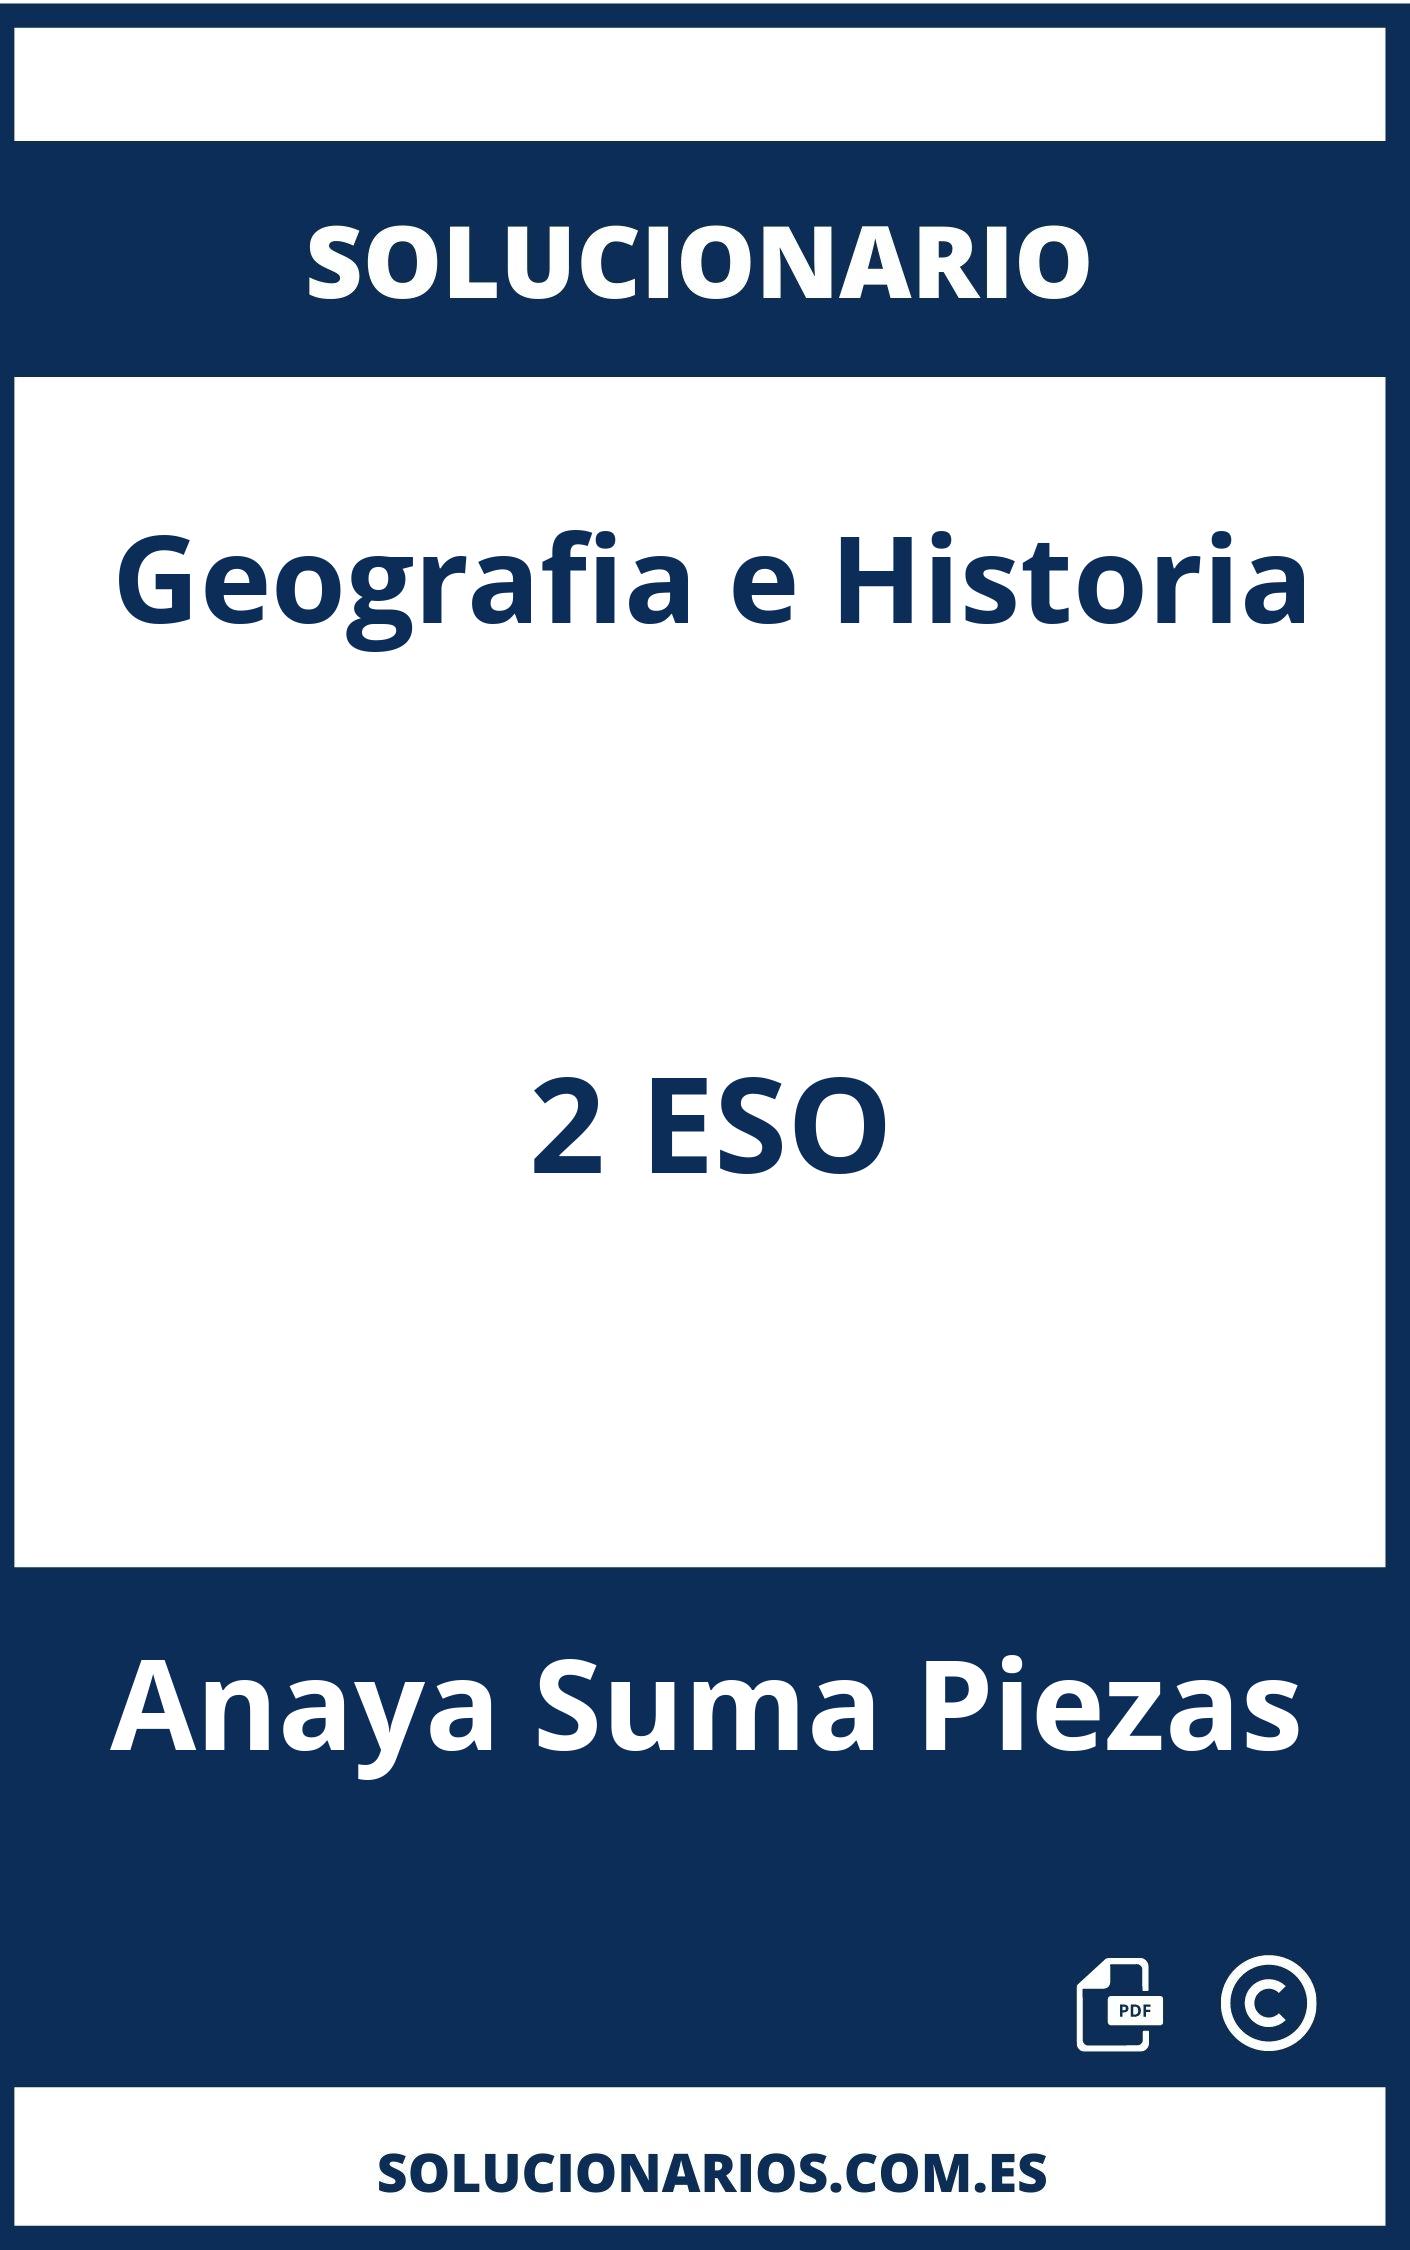 Solucionario Geografia e Historia 2 ESO Anaya Suma Piezas